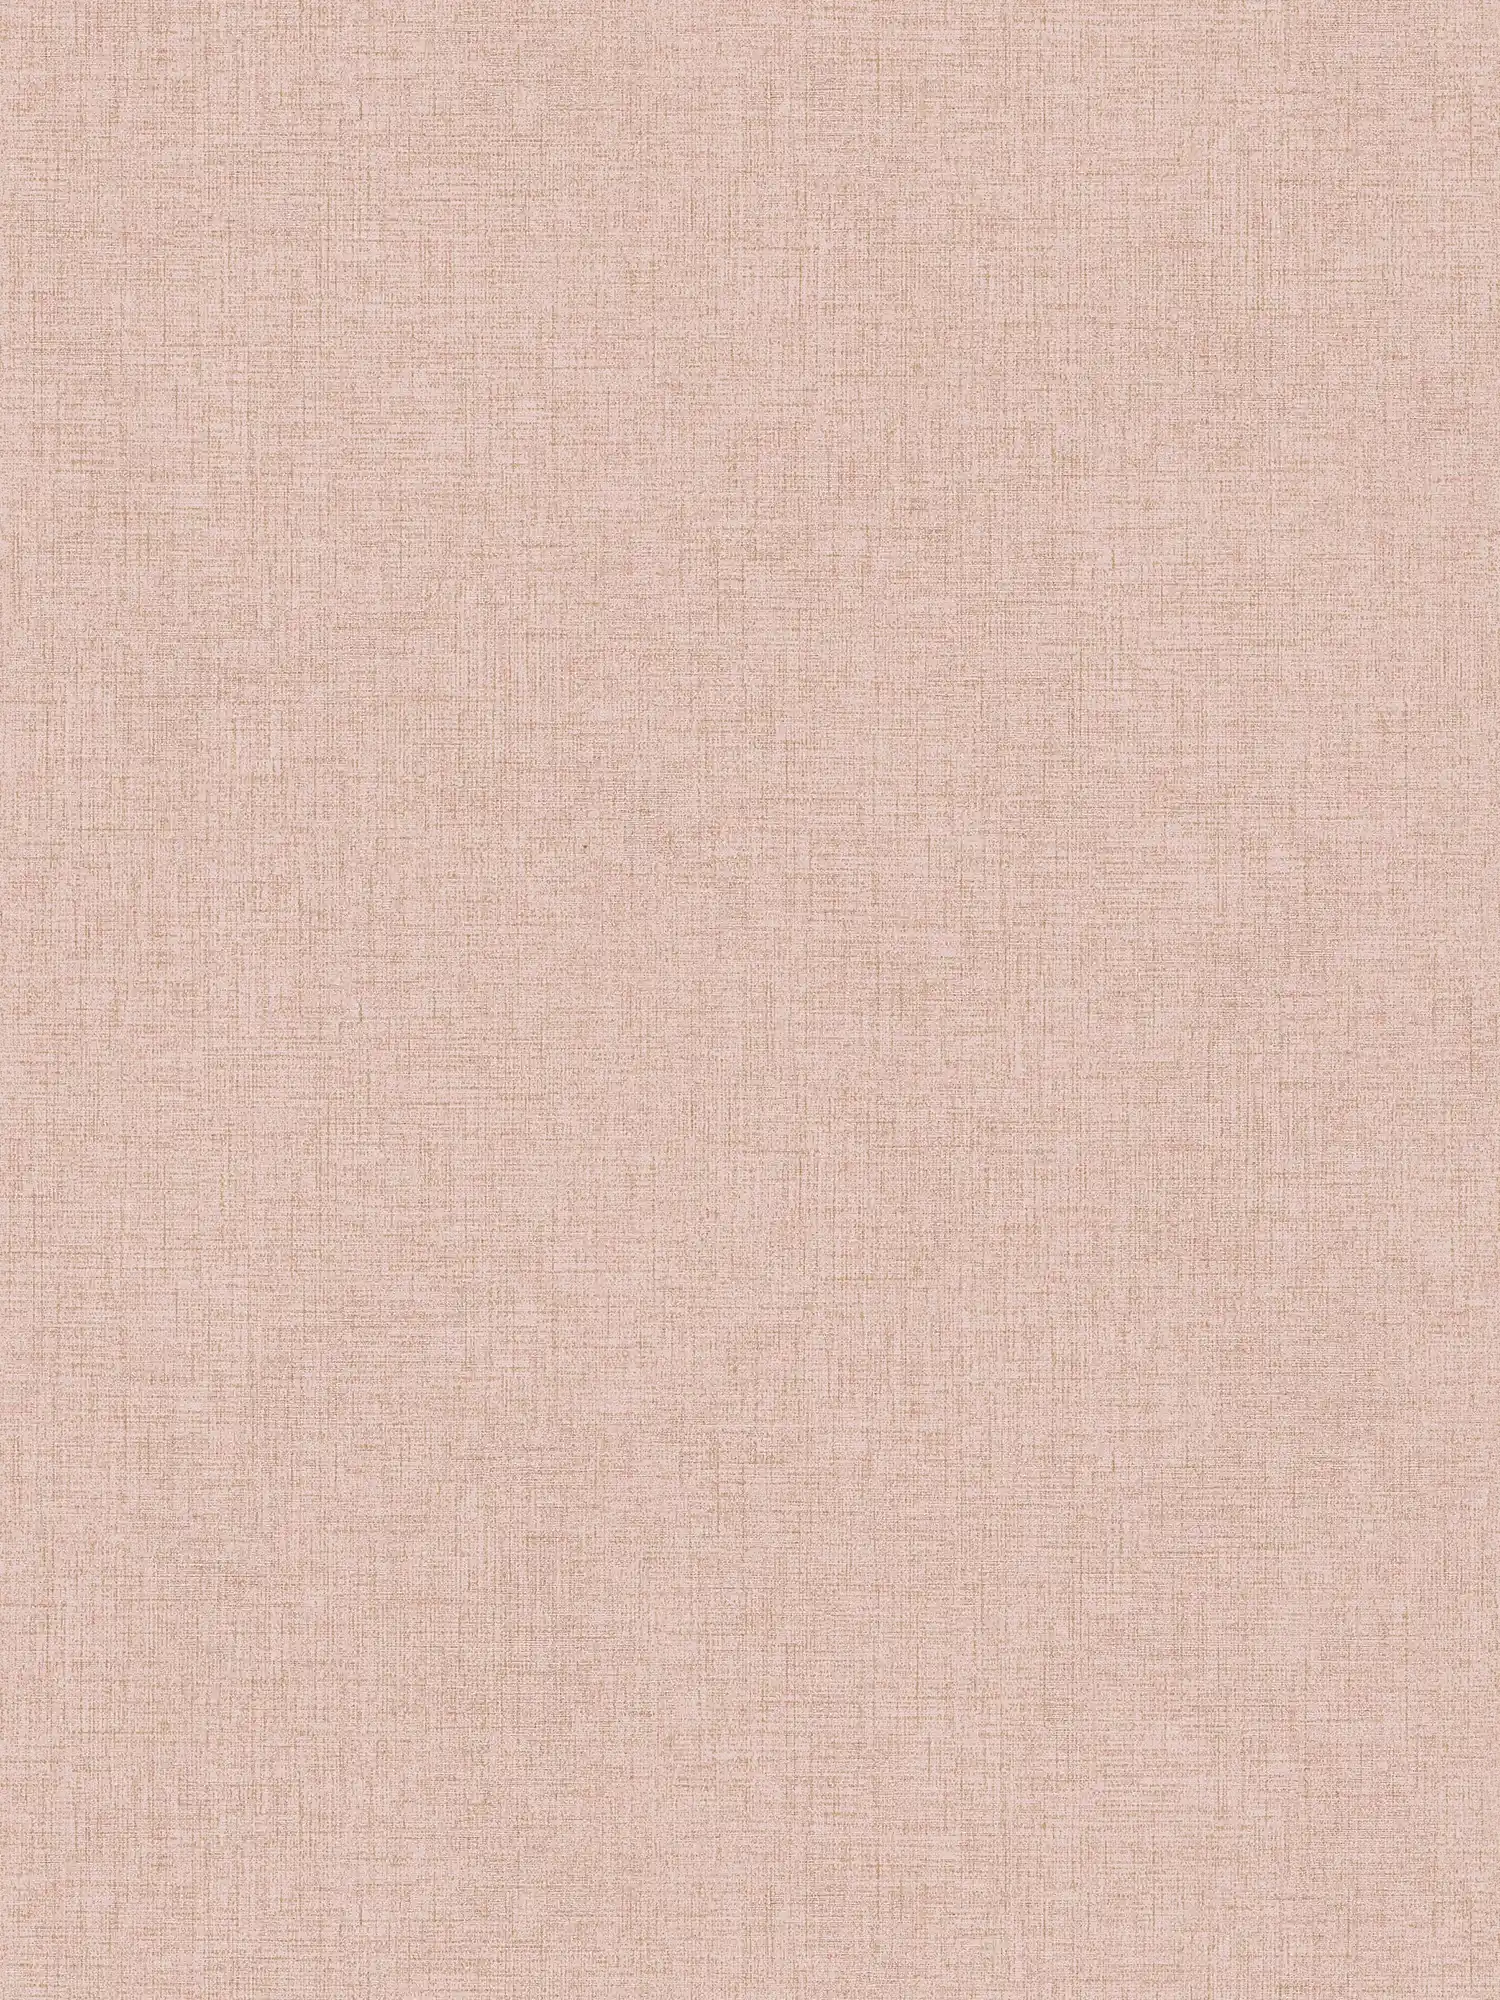 Plain wallpaper with subtle linen look - pink
